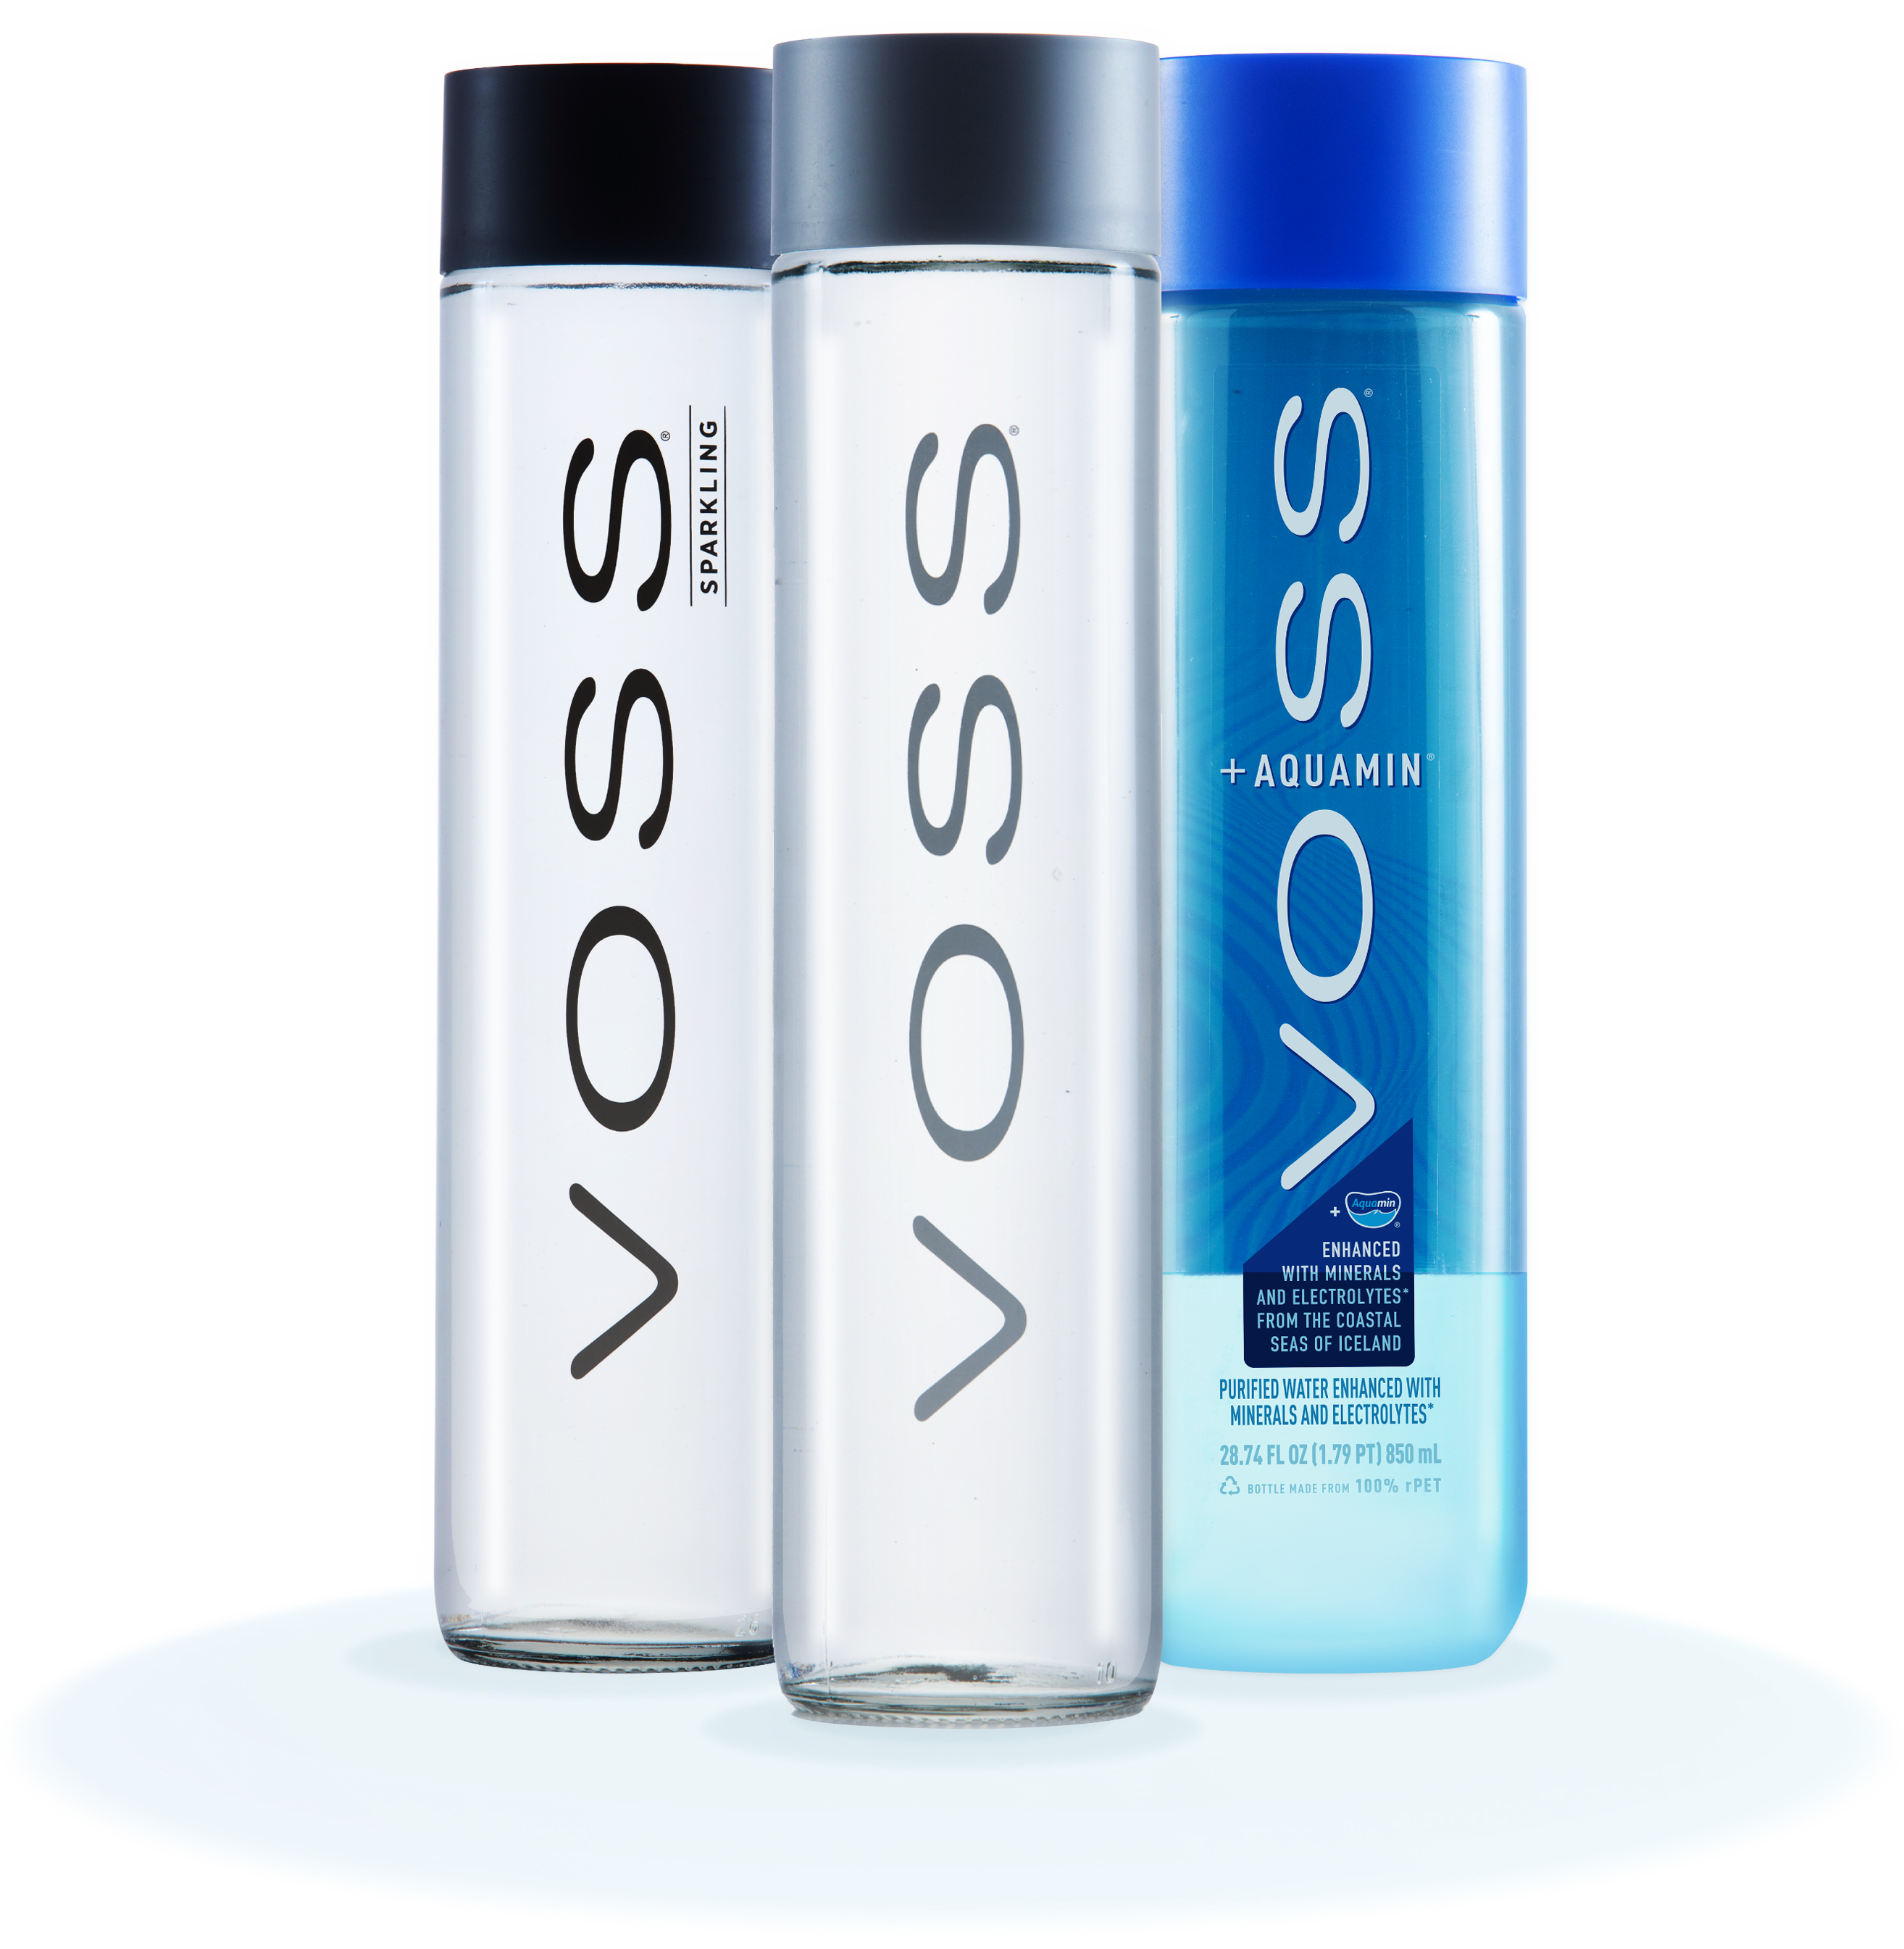 VOSS Sparkling, VOSS Still, and VOSS plus Aquamin bottles